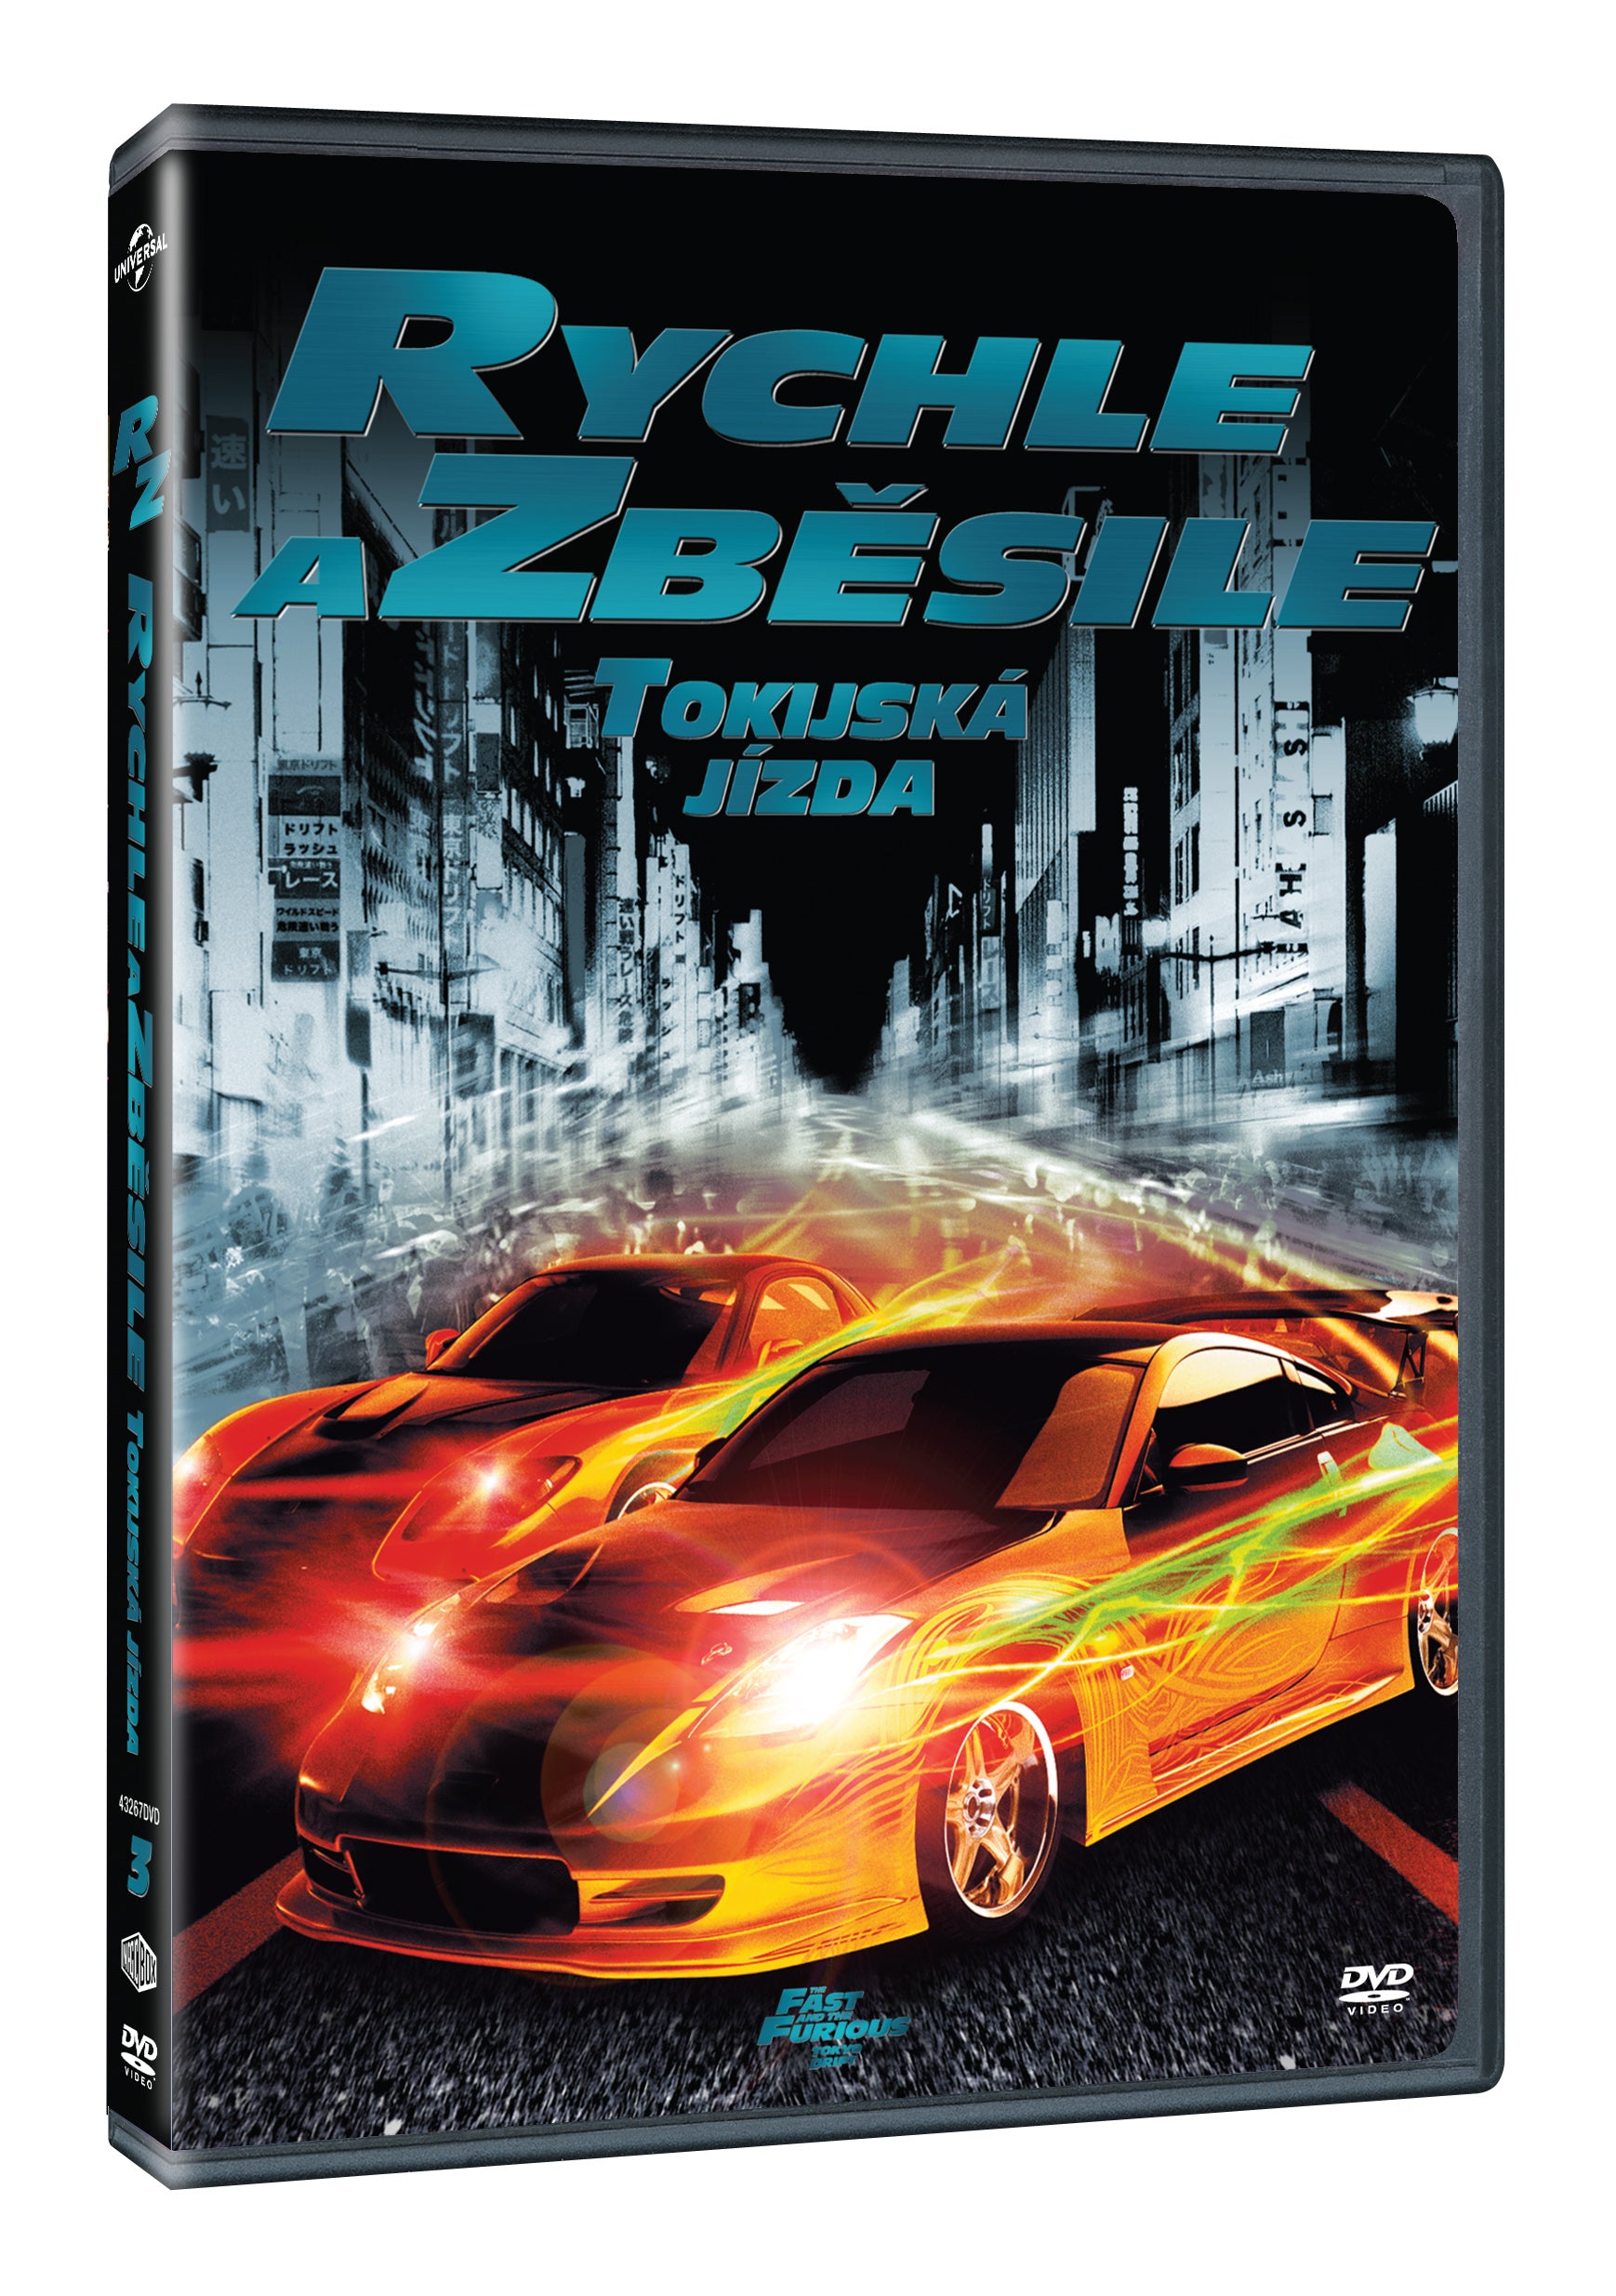 Rychle a zbesile: Tokijska jizda DVD / The Fast and the Furious: Tokyo Drift